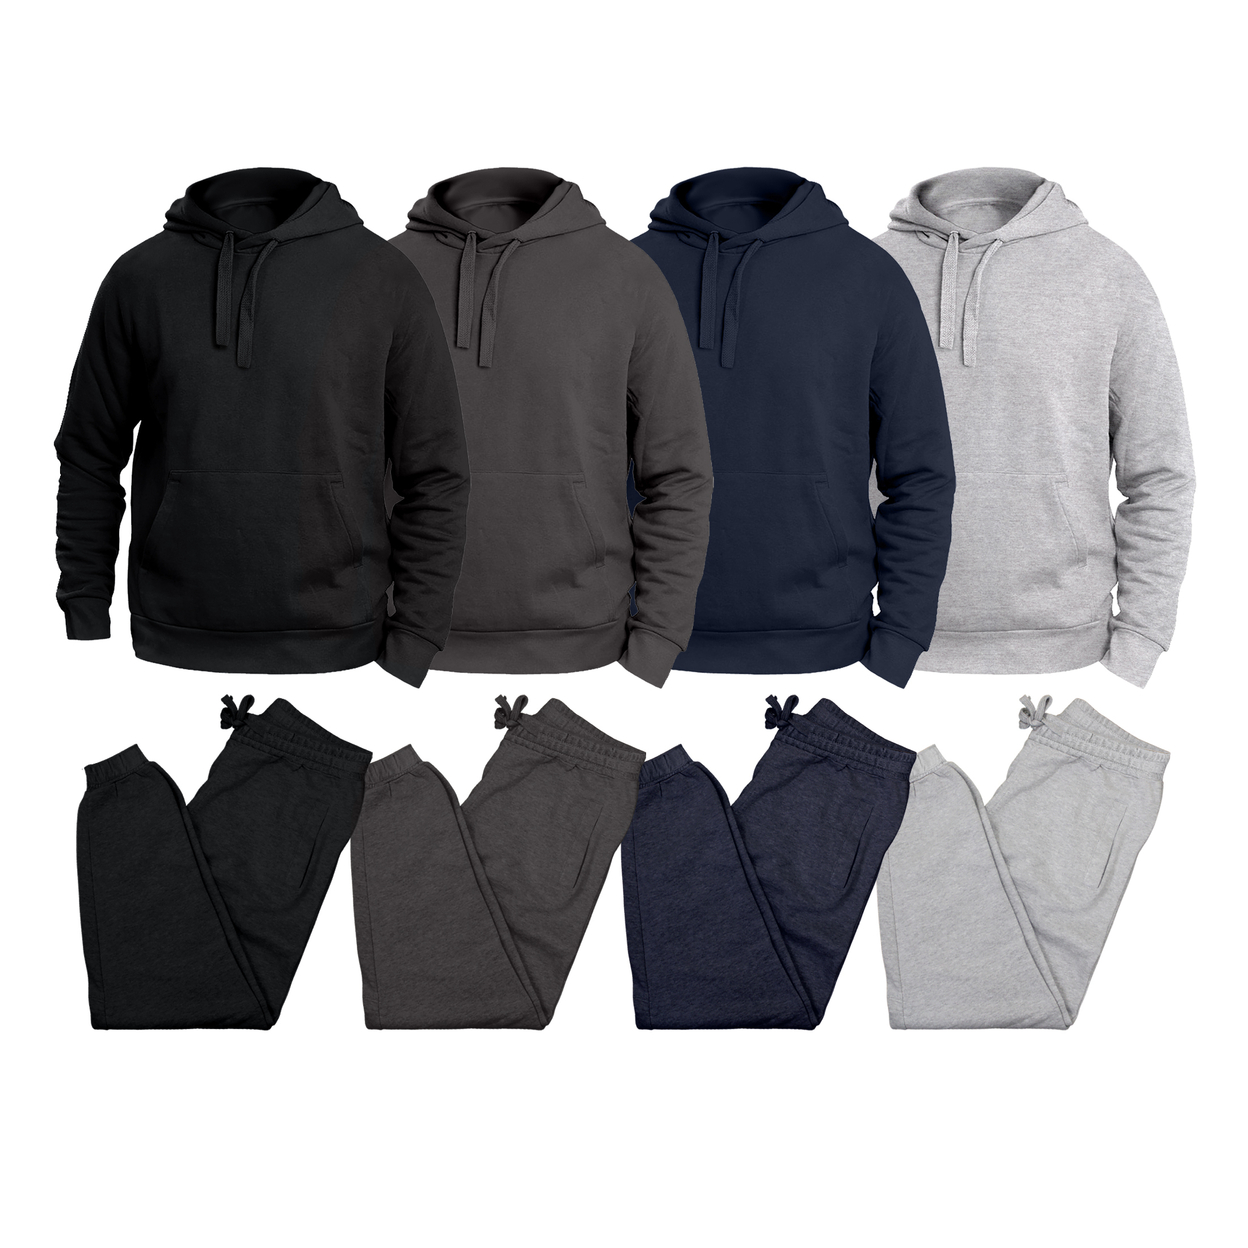 Men's Big & Tall Winter Warm Cozy Athletic Fleece Lined Multi-Pocket Cargo Sweatsuit - Black, 3xl